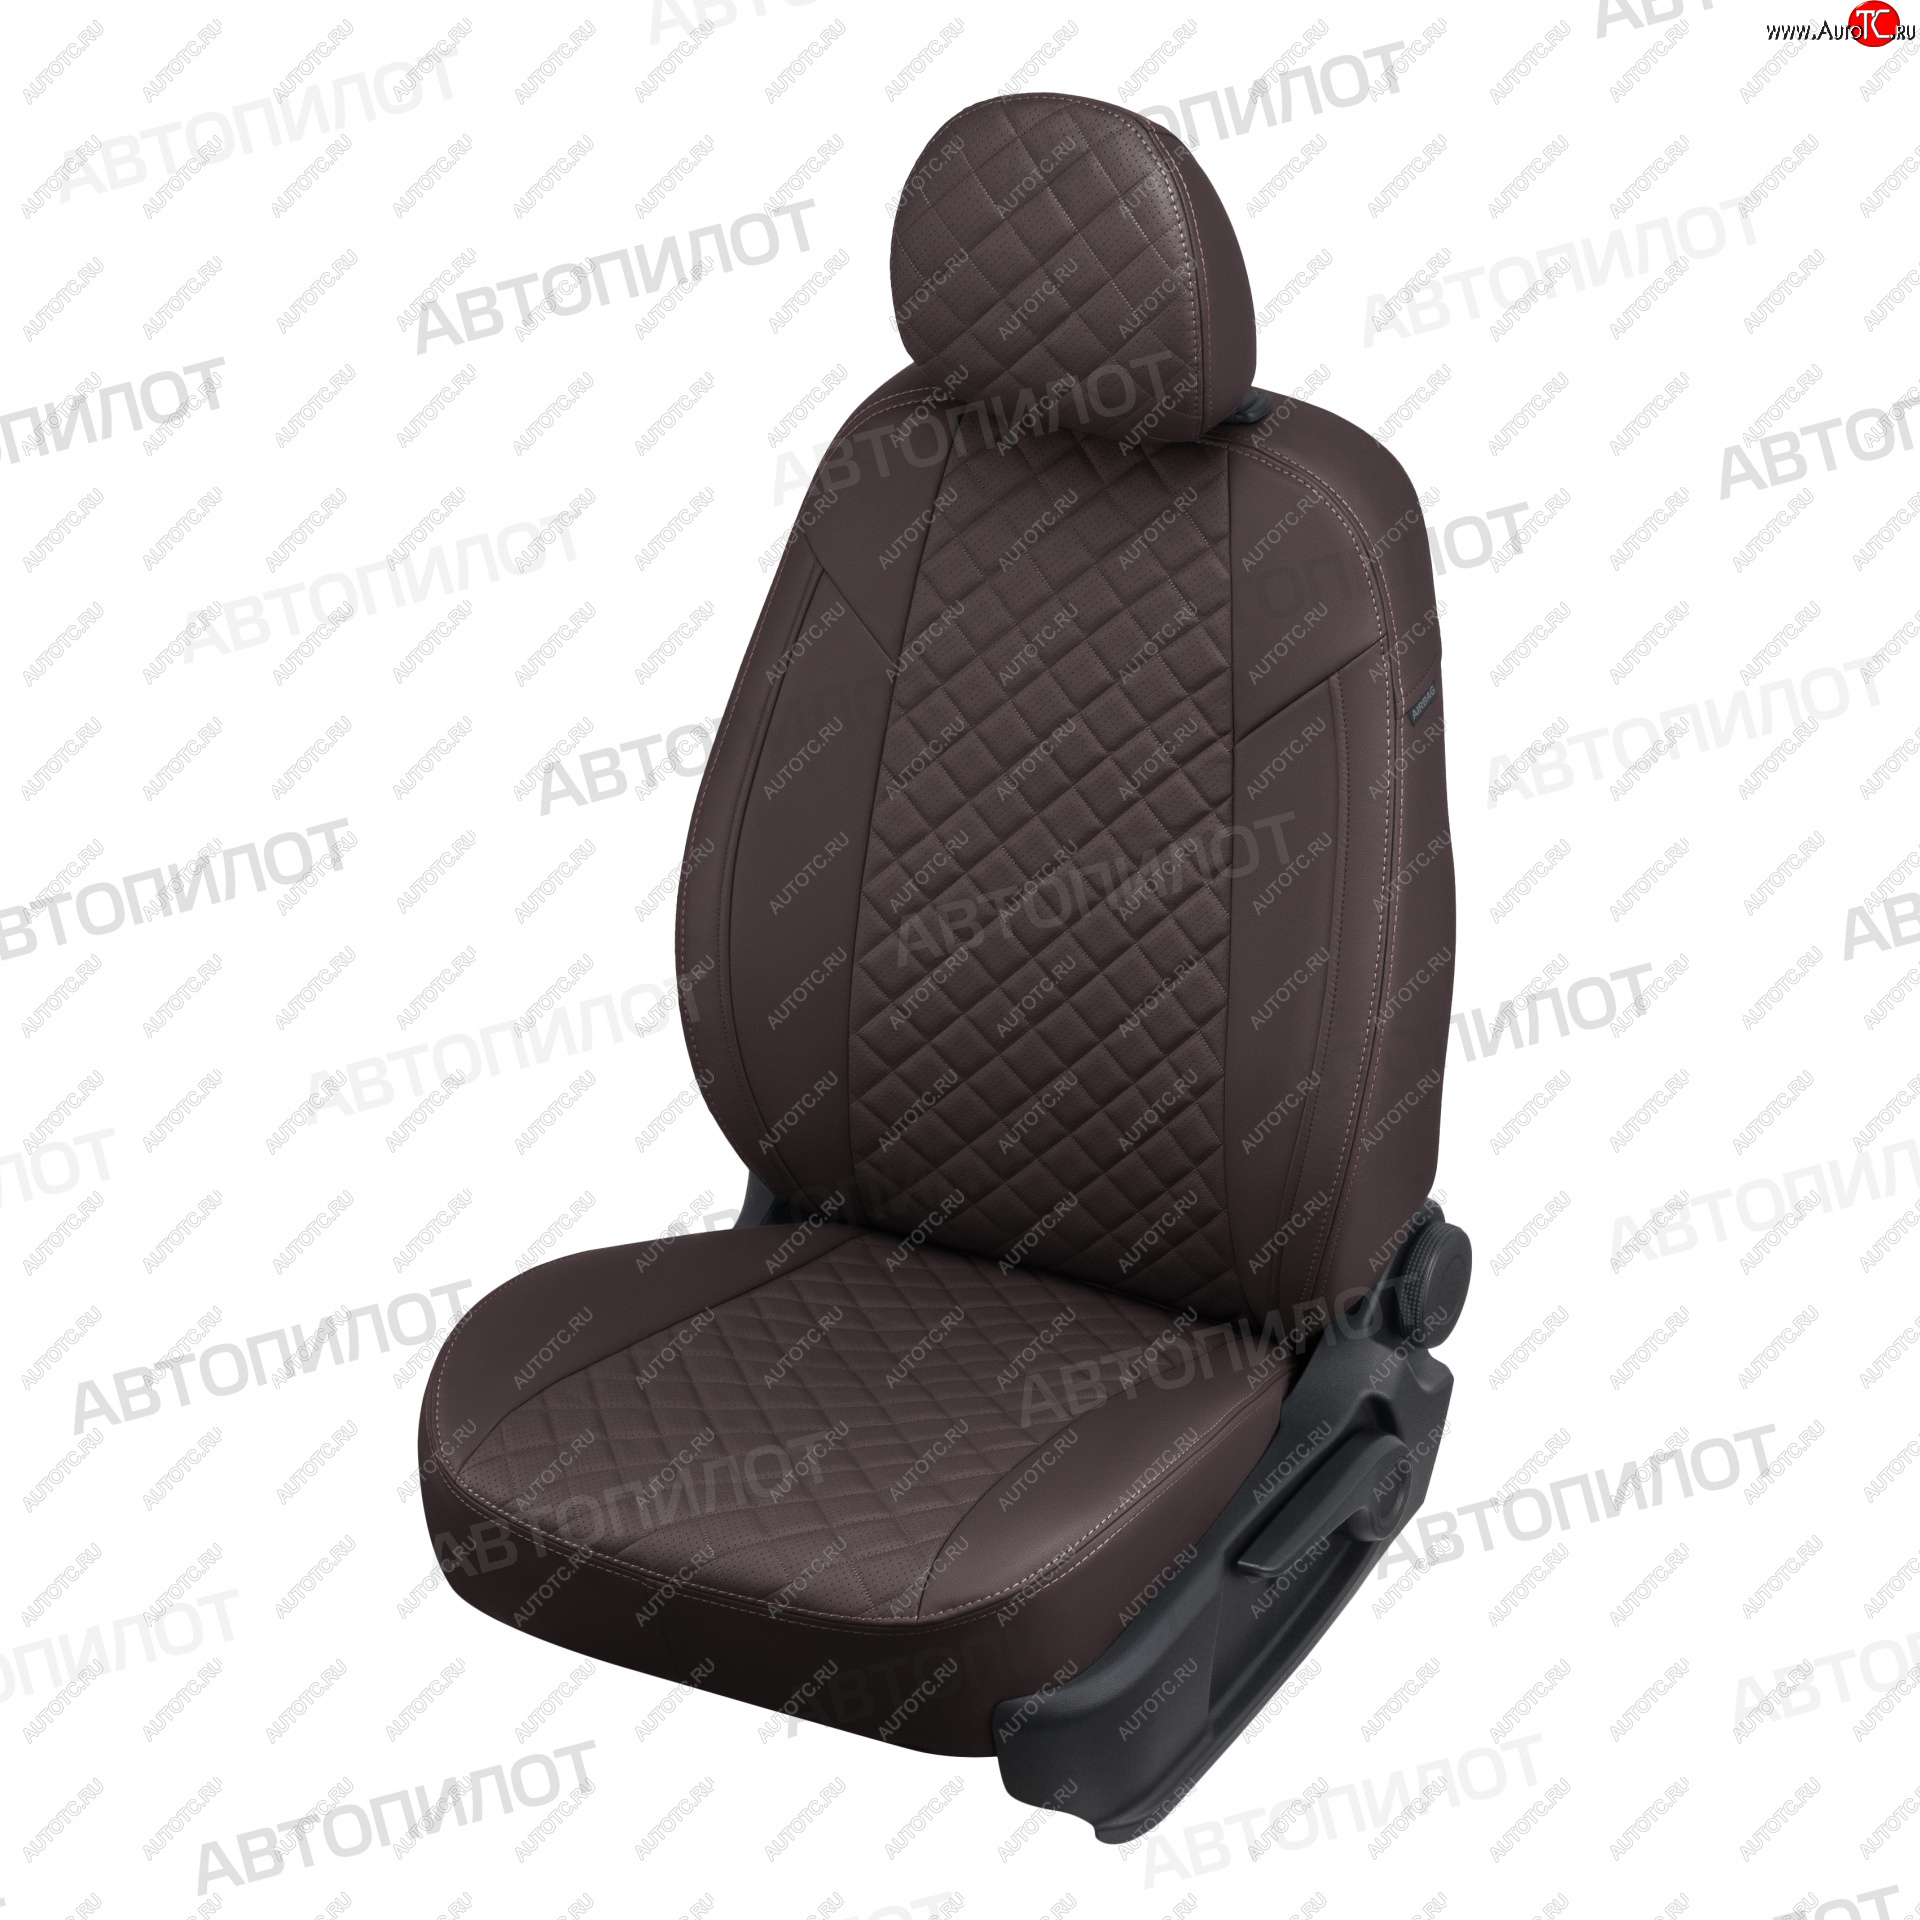 13 999 р. Чехлы сидений (экокожа) Автопилот Ромб  Lexus IS  250 XE20 седан (2005-2013) (шоколад)